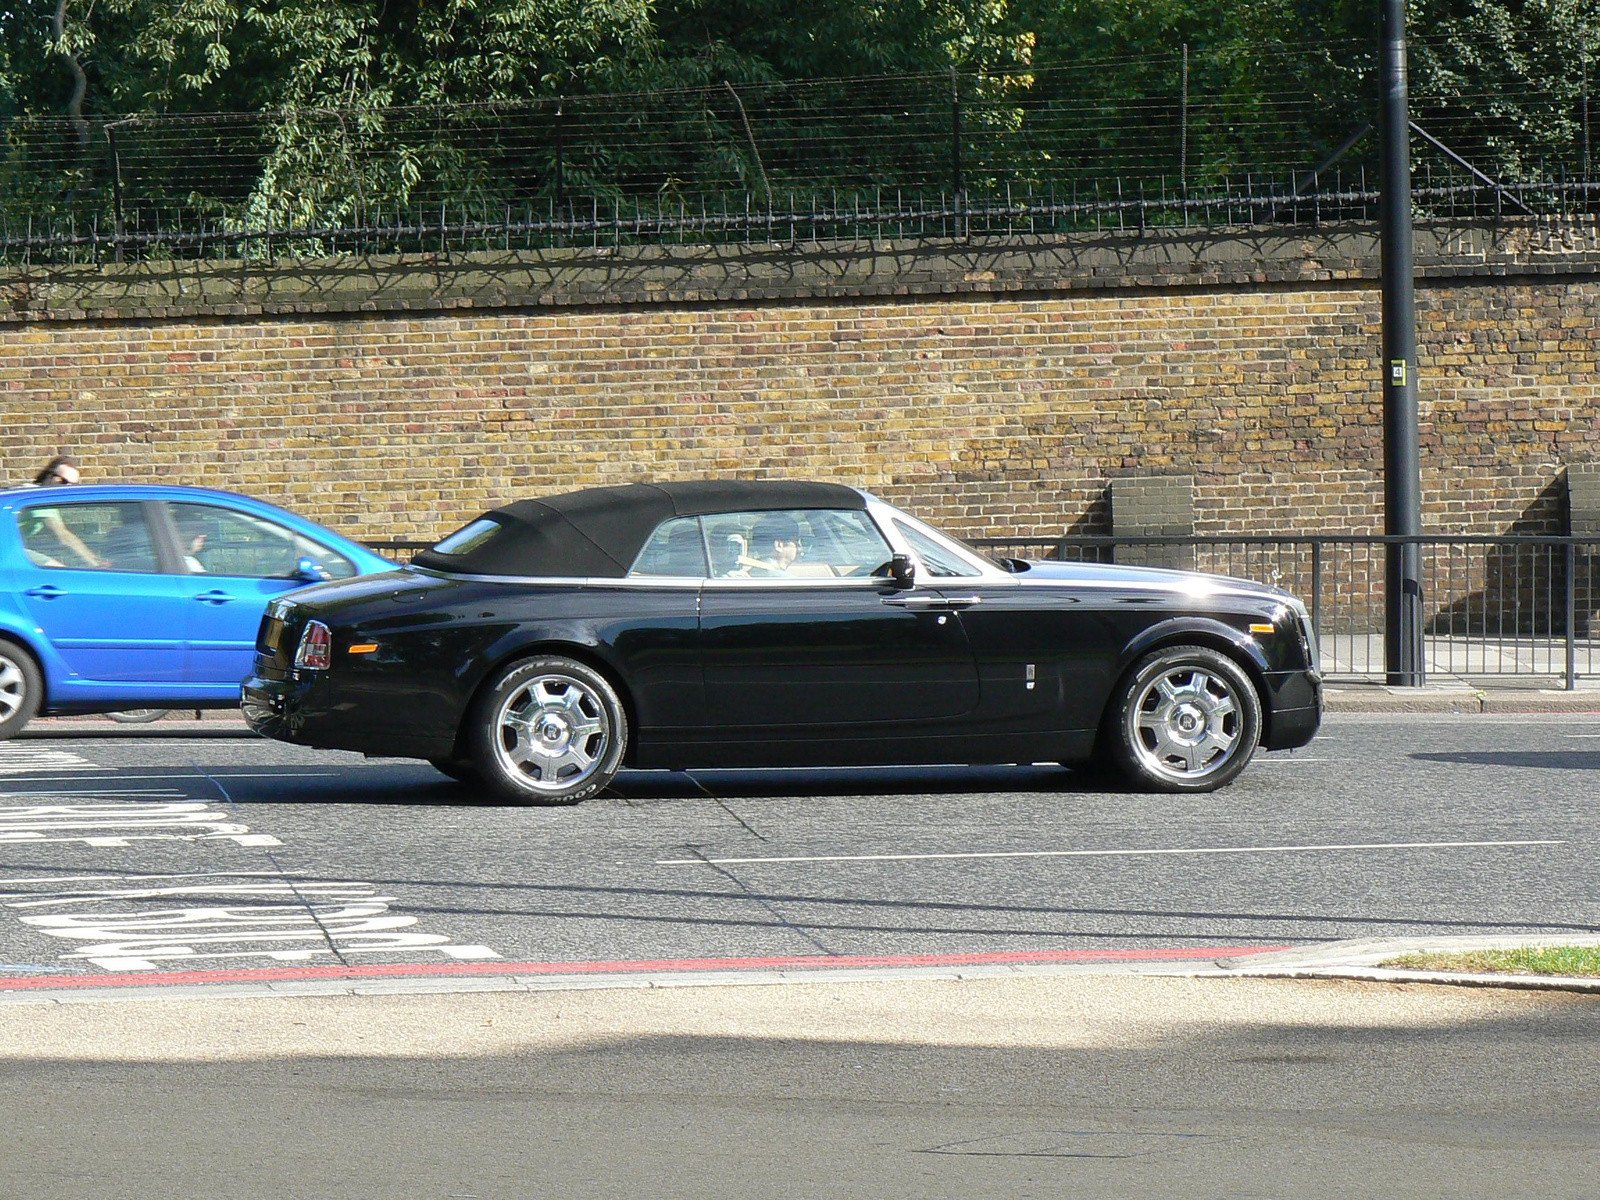 (1) Rolls-Royce Drophead Coupe